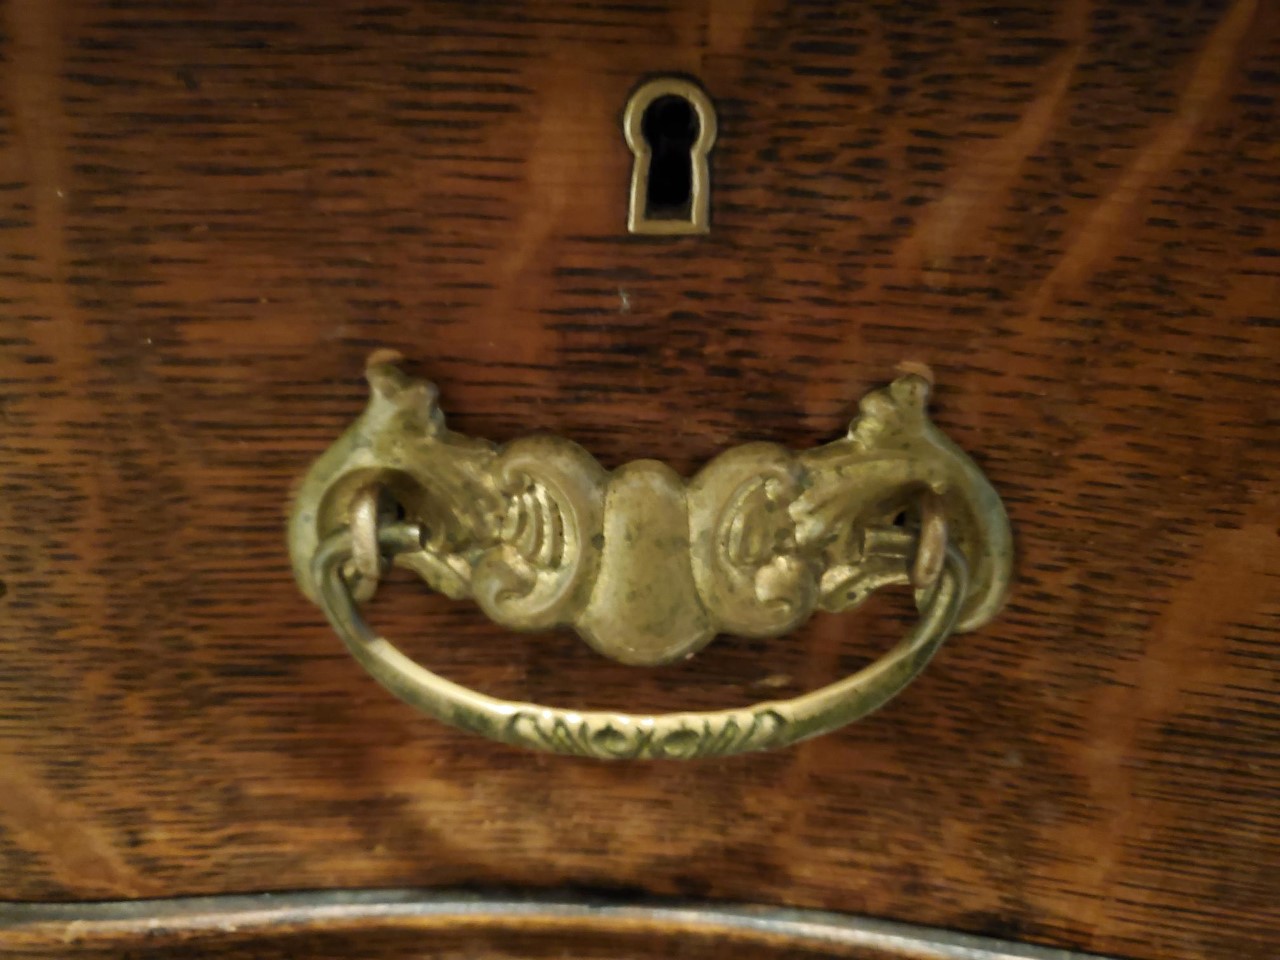 Close up details of an antique dresser found on Craiglist for $100.